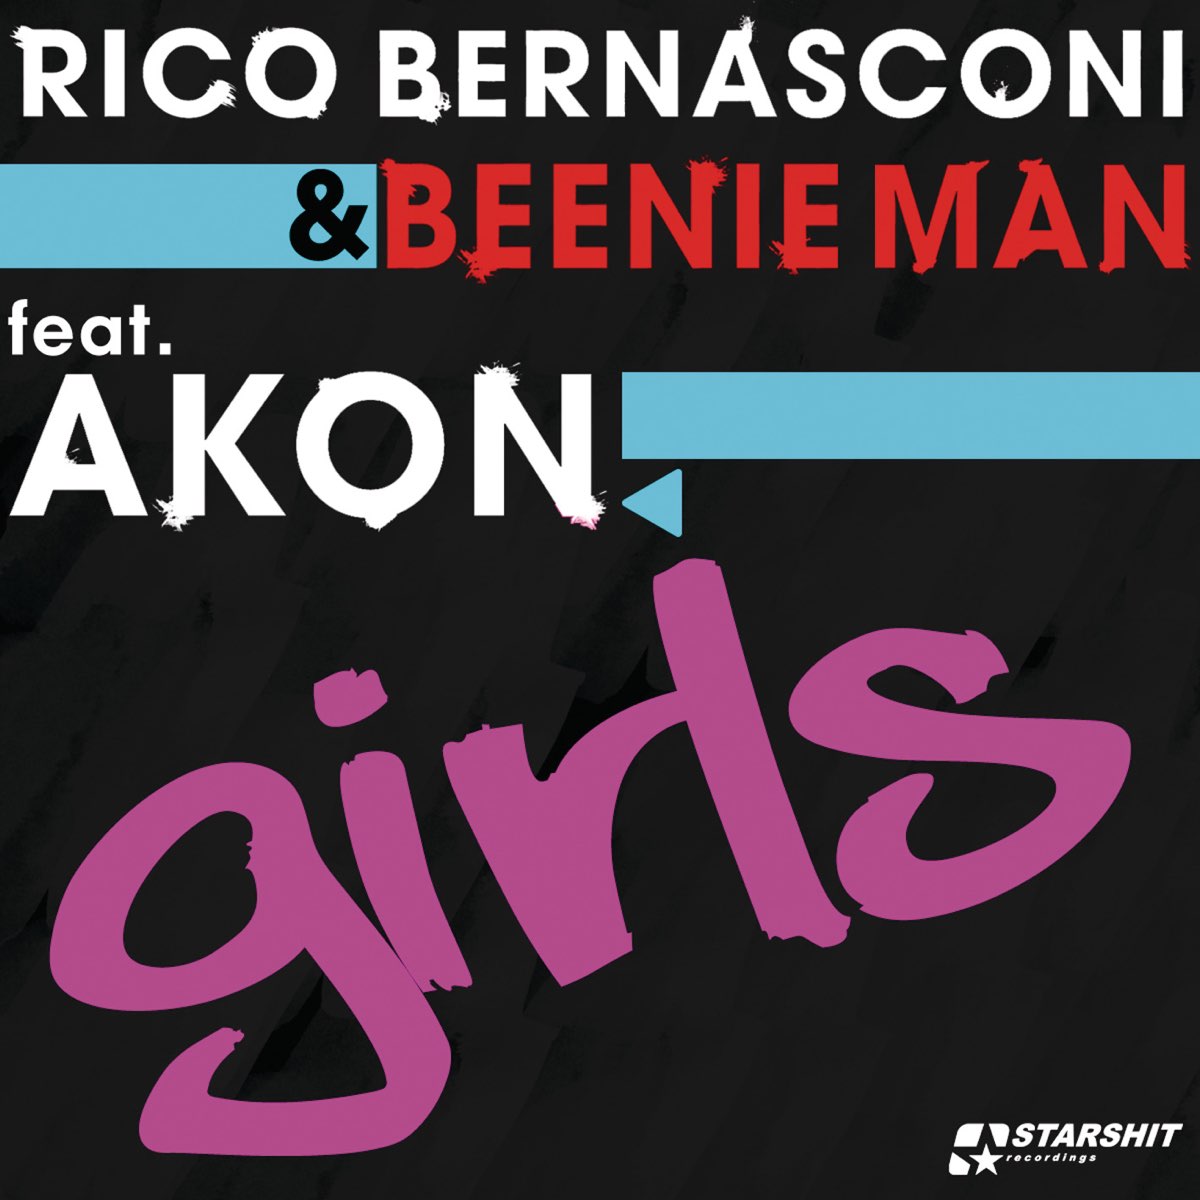 Рико Бернаскони. Beenie man ft. Akon girls. Rico Bernasconi Club Mix. Rico Bernasconi Lotus. Zorbas dance rico bernasconi remix